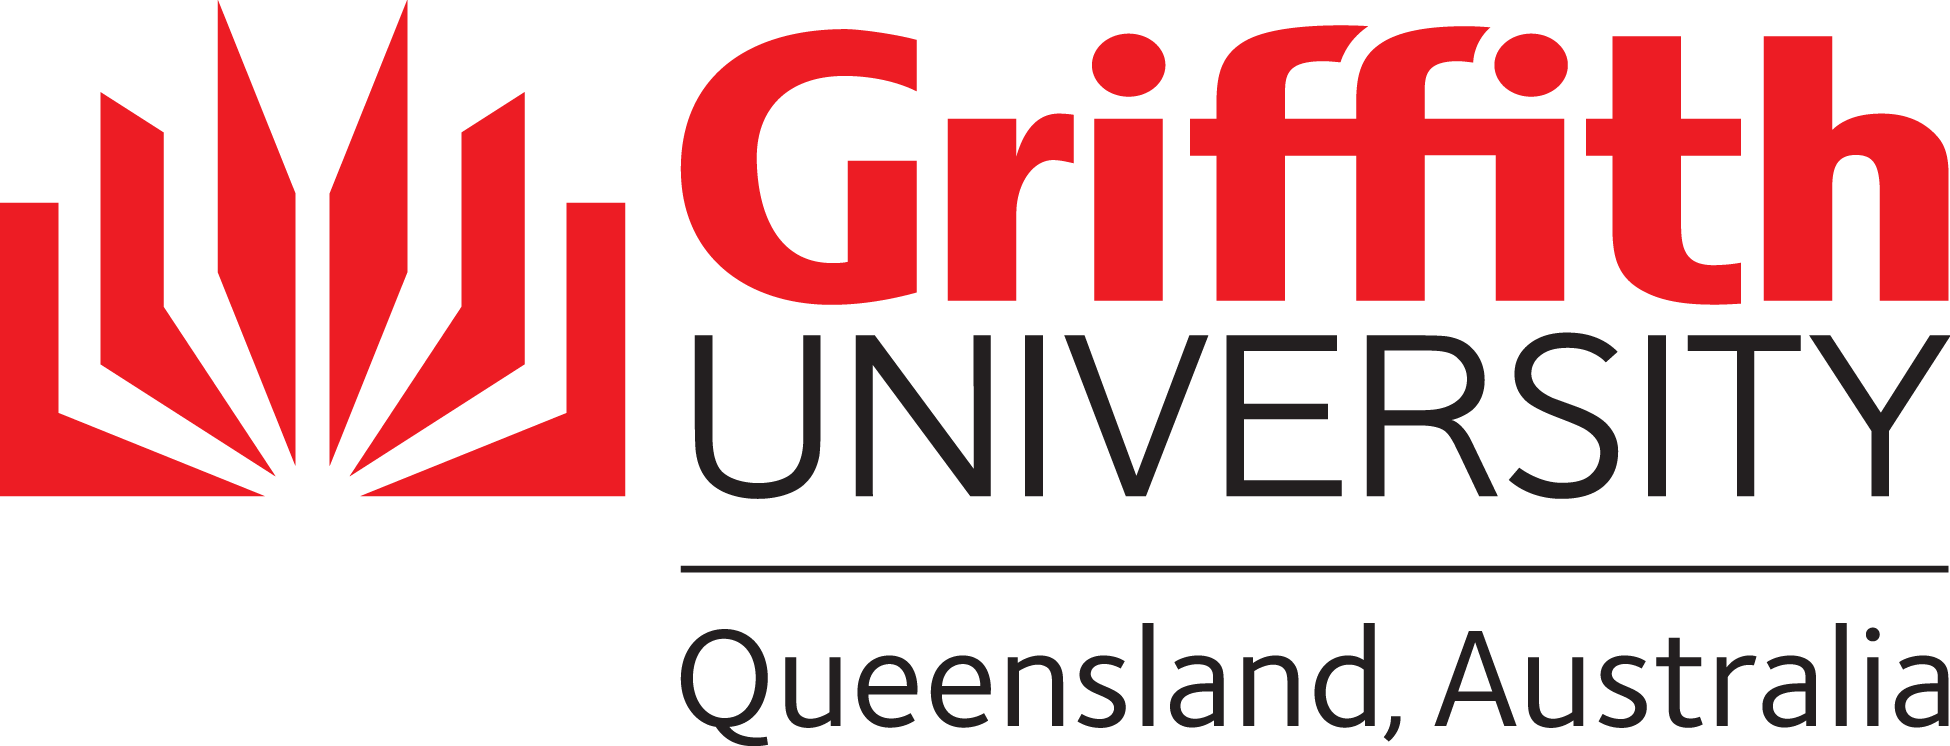 Griffith University State Honours Ensemble Program SHEP Queensland